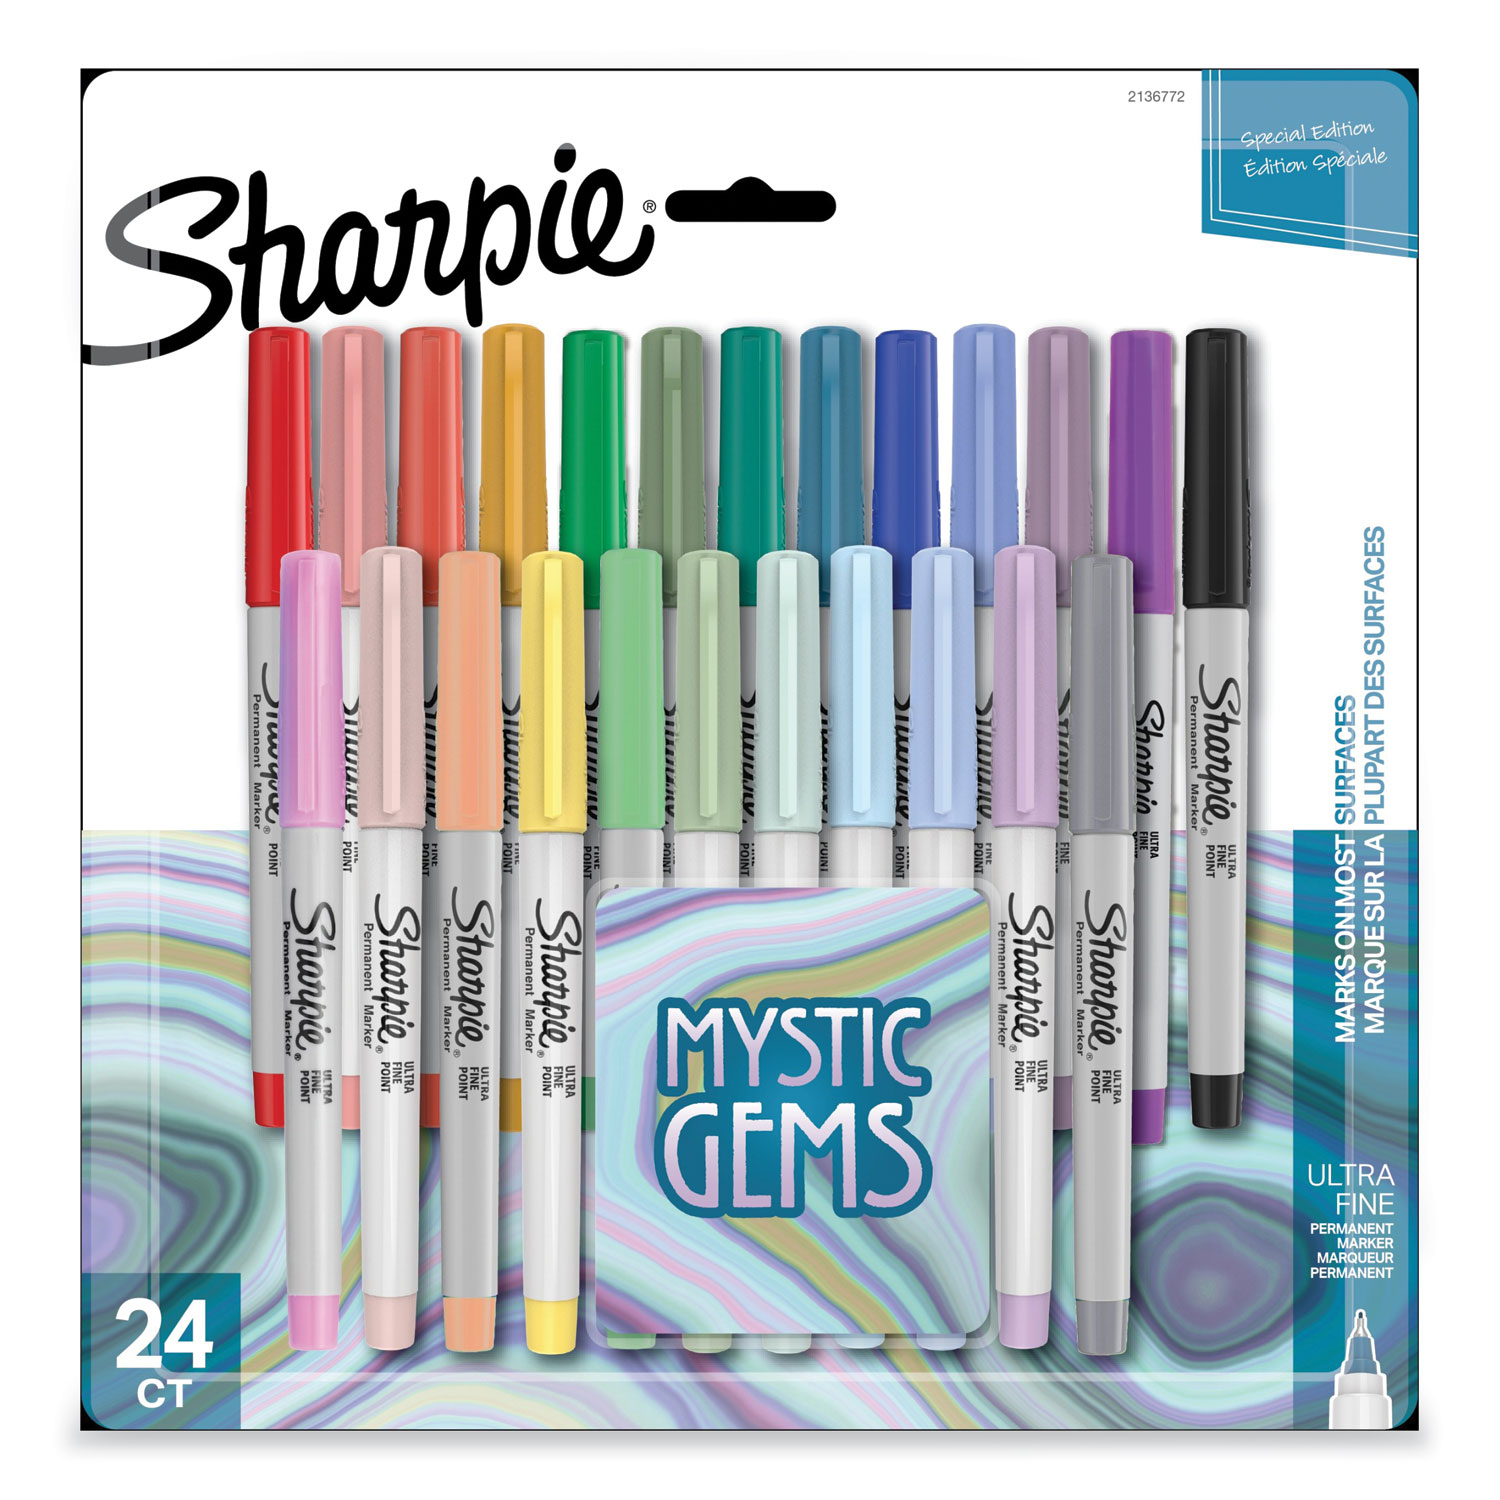 Sharpie Mystic Gems Permanent Markers - Ultra Fine Marker